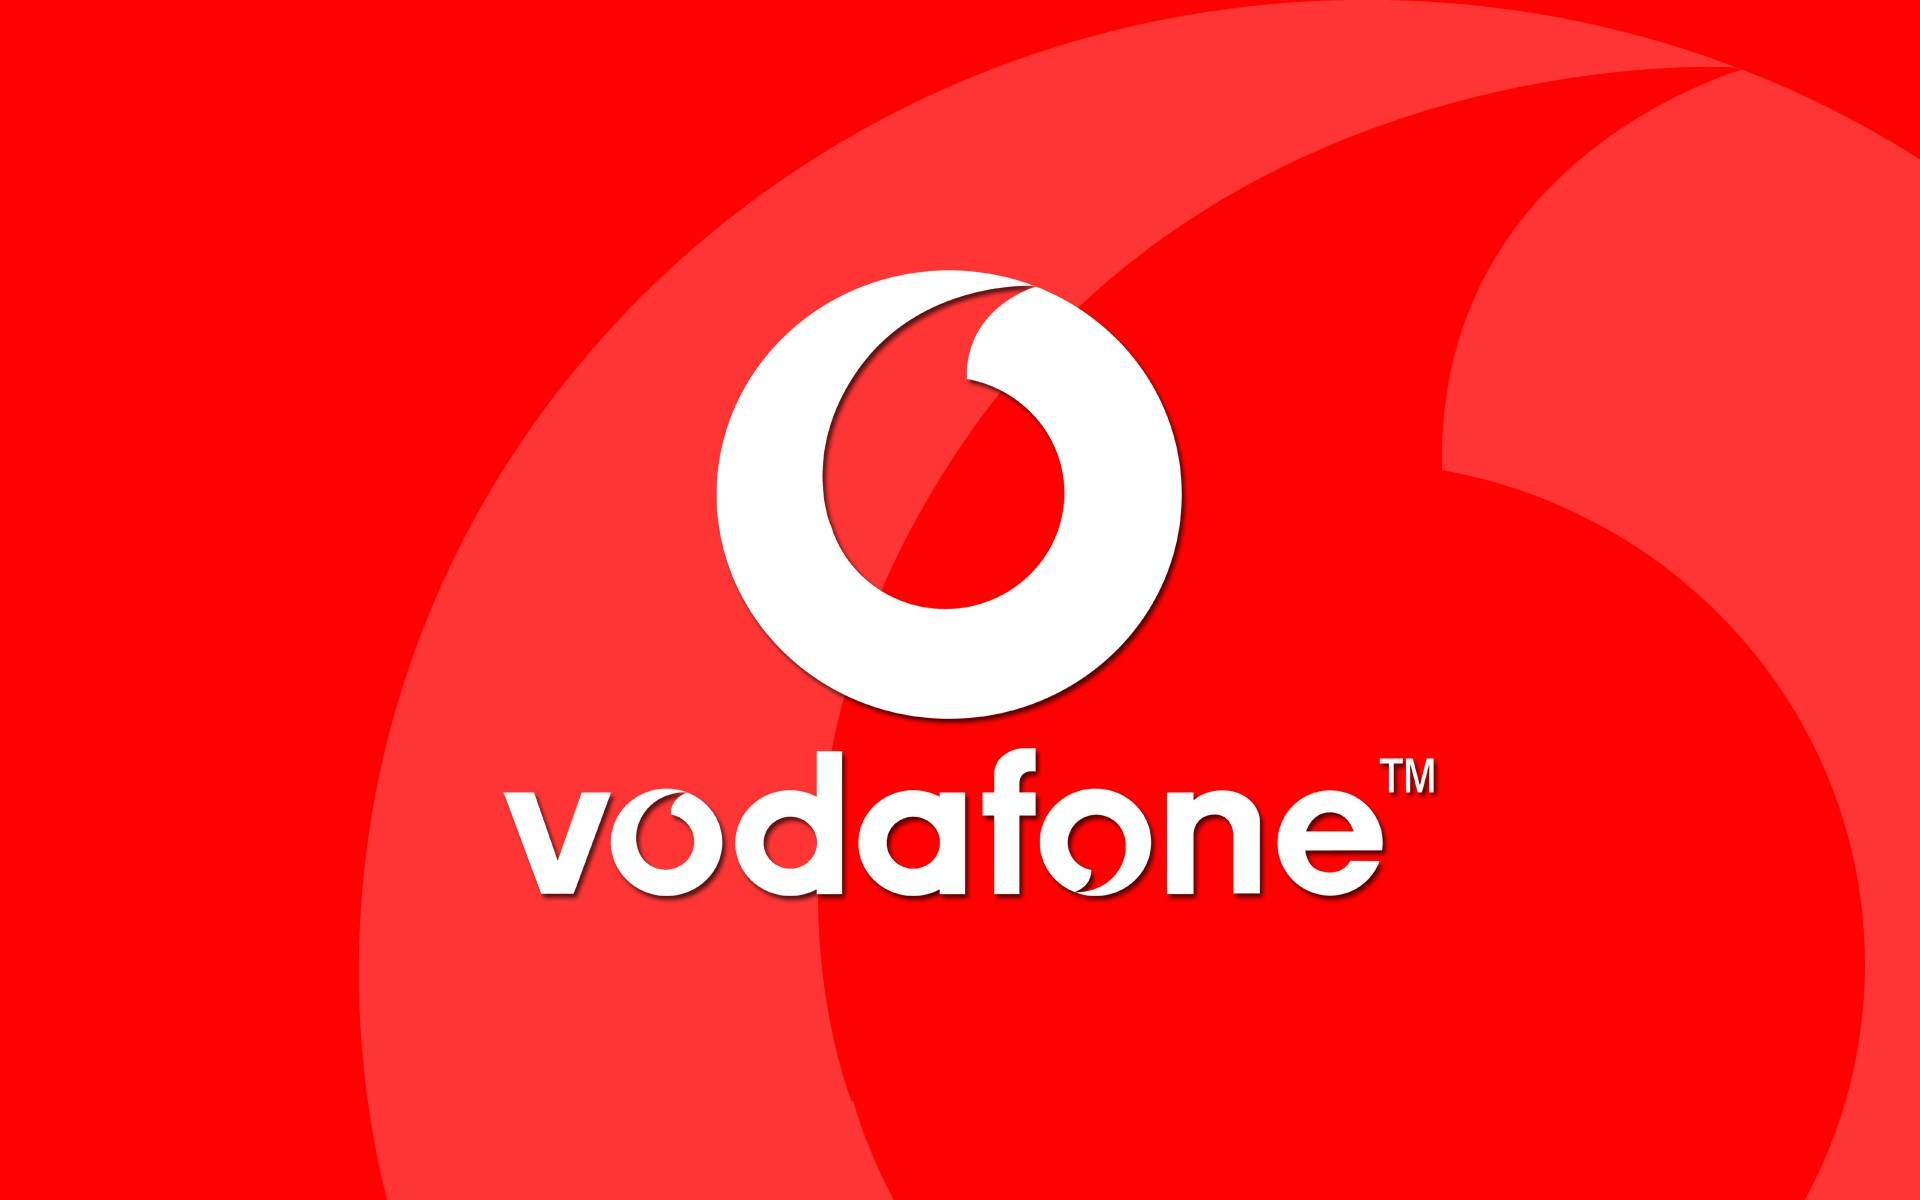 Europeiska Vodafone